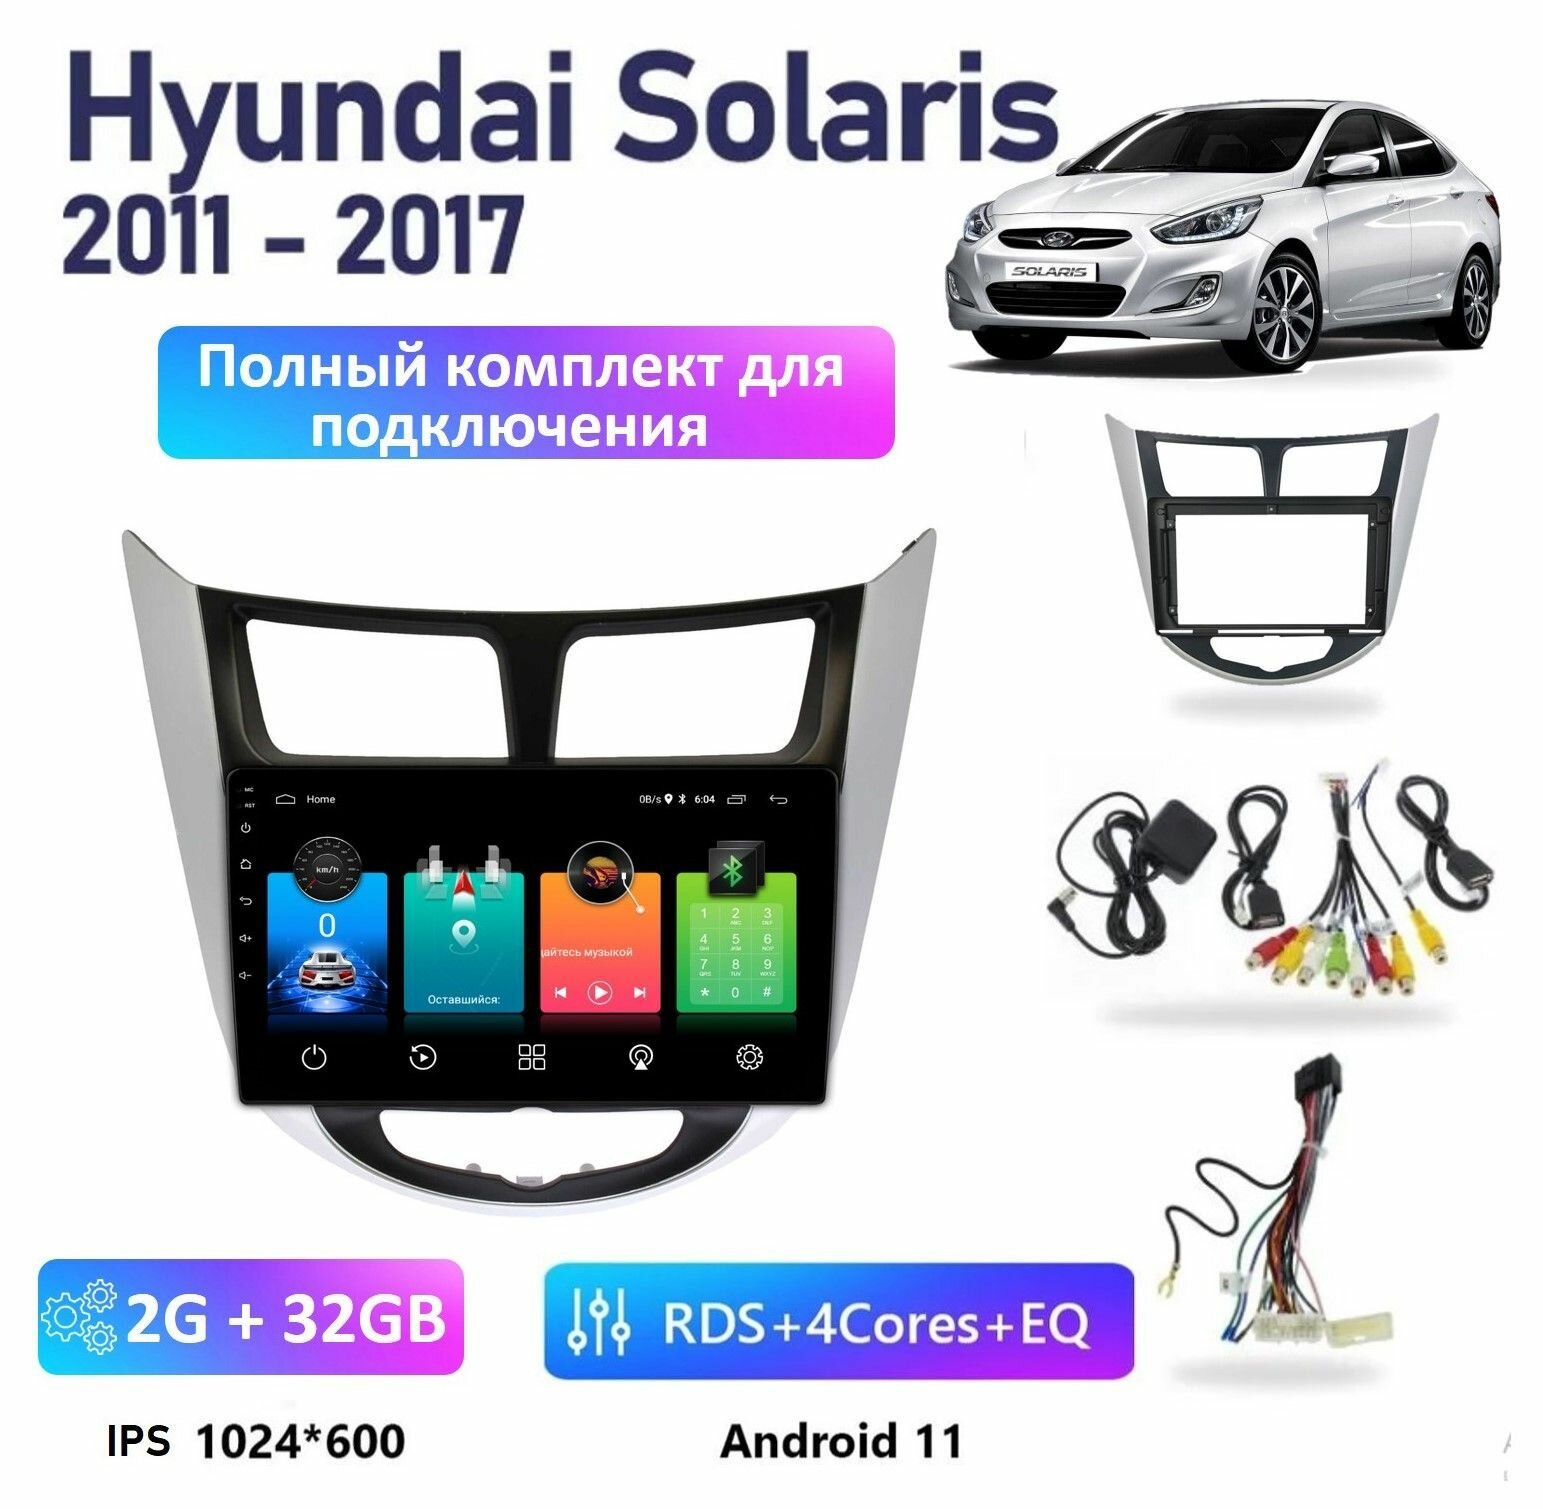 Автомагнитола Android 2Gb+32Gb Hyundai Solaris Солярис 2011 - 2017 / 9 дюймов / GPS / Bluetooth / Wi-Fi / FM - радио / Магнитола 2 дин на Андройд хендай Солярис 1